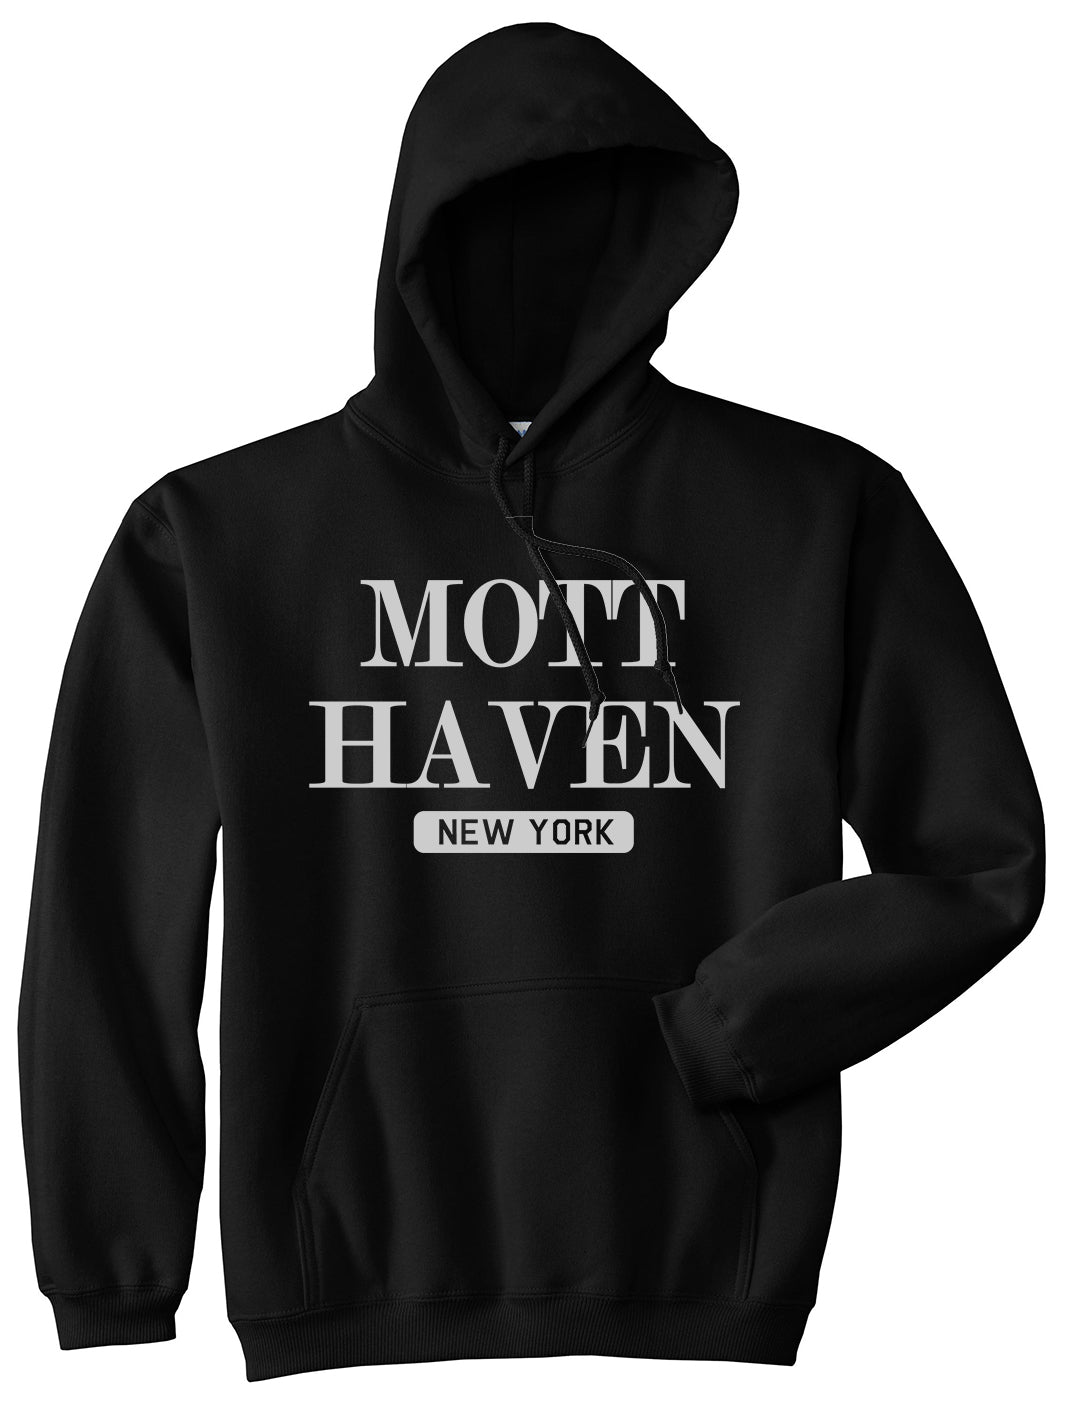 Mott Haven New York Mens Pullover Hoodie Black